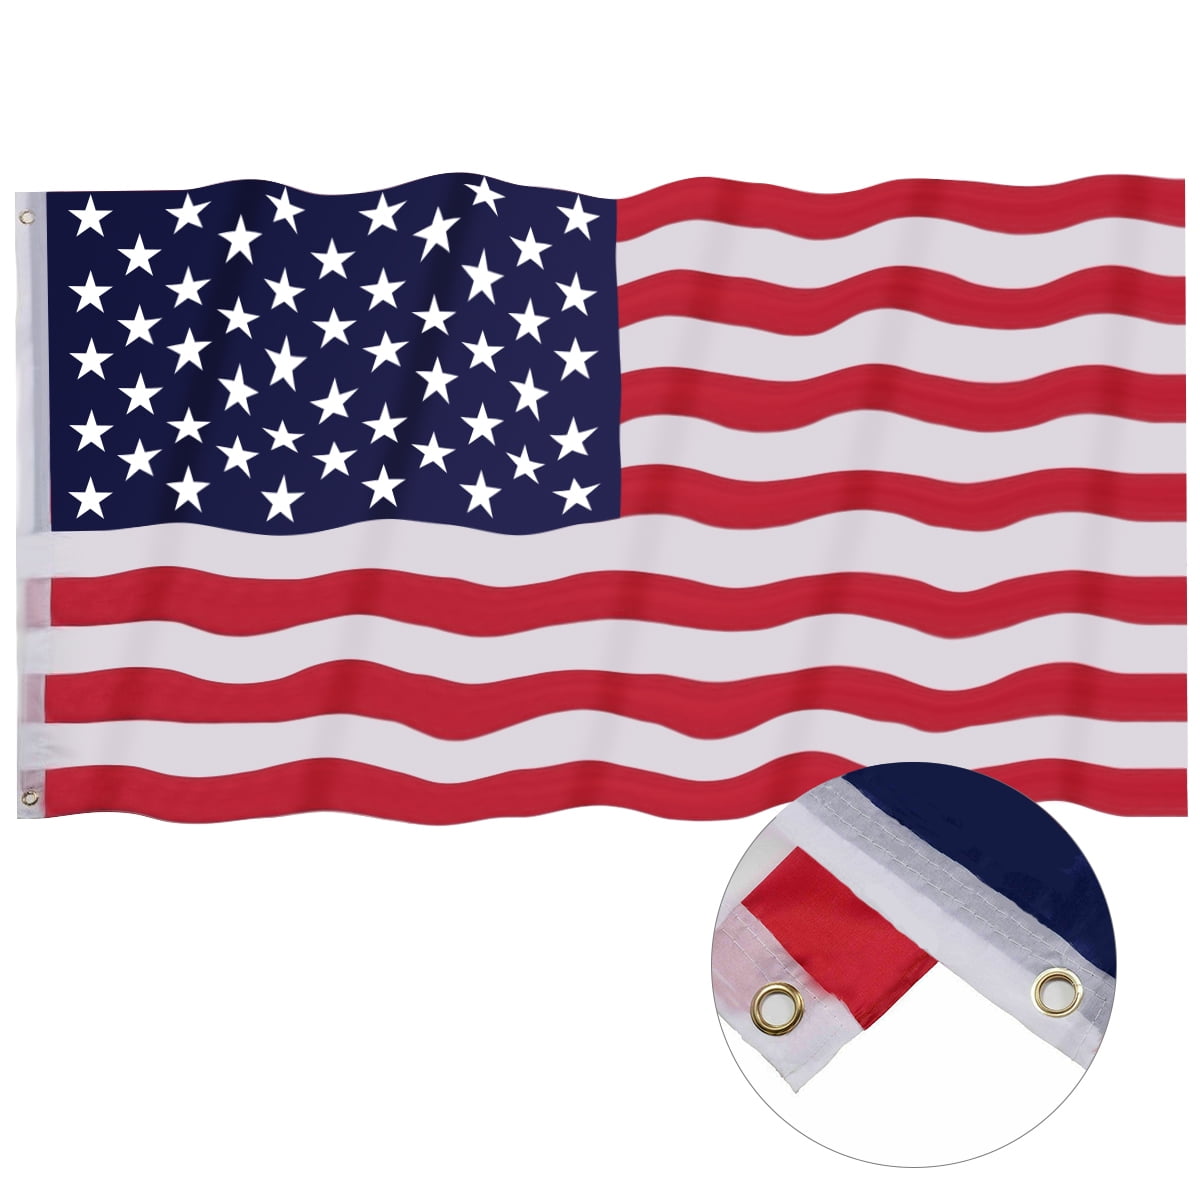 8 3' x 5' FT USA US U.S LOT OF American Flag Polyester 